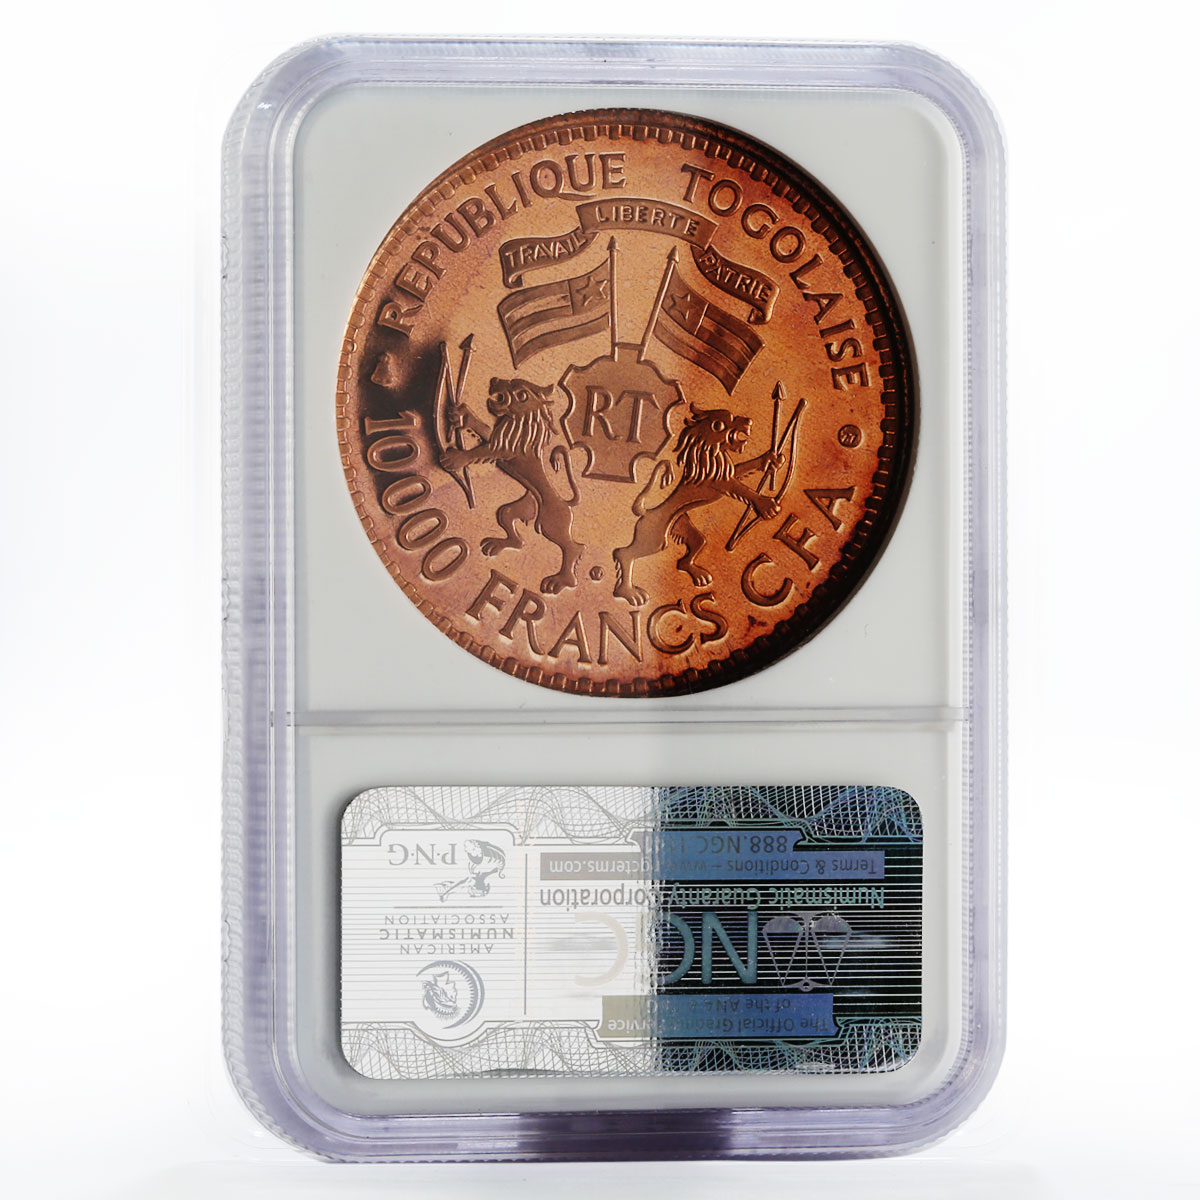 Togo 10000 francs Essai General Gnassingbe Eyadema PF67 NGC E12 copper coin 1977